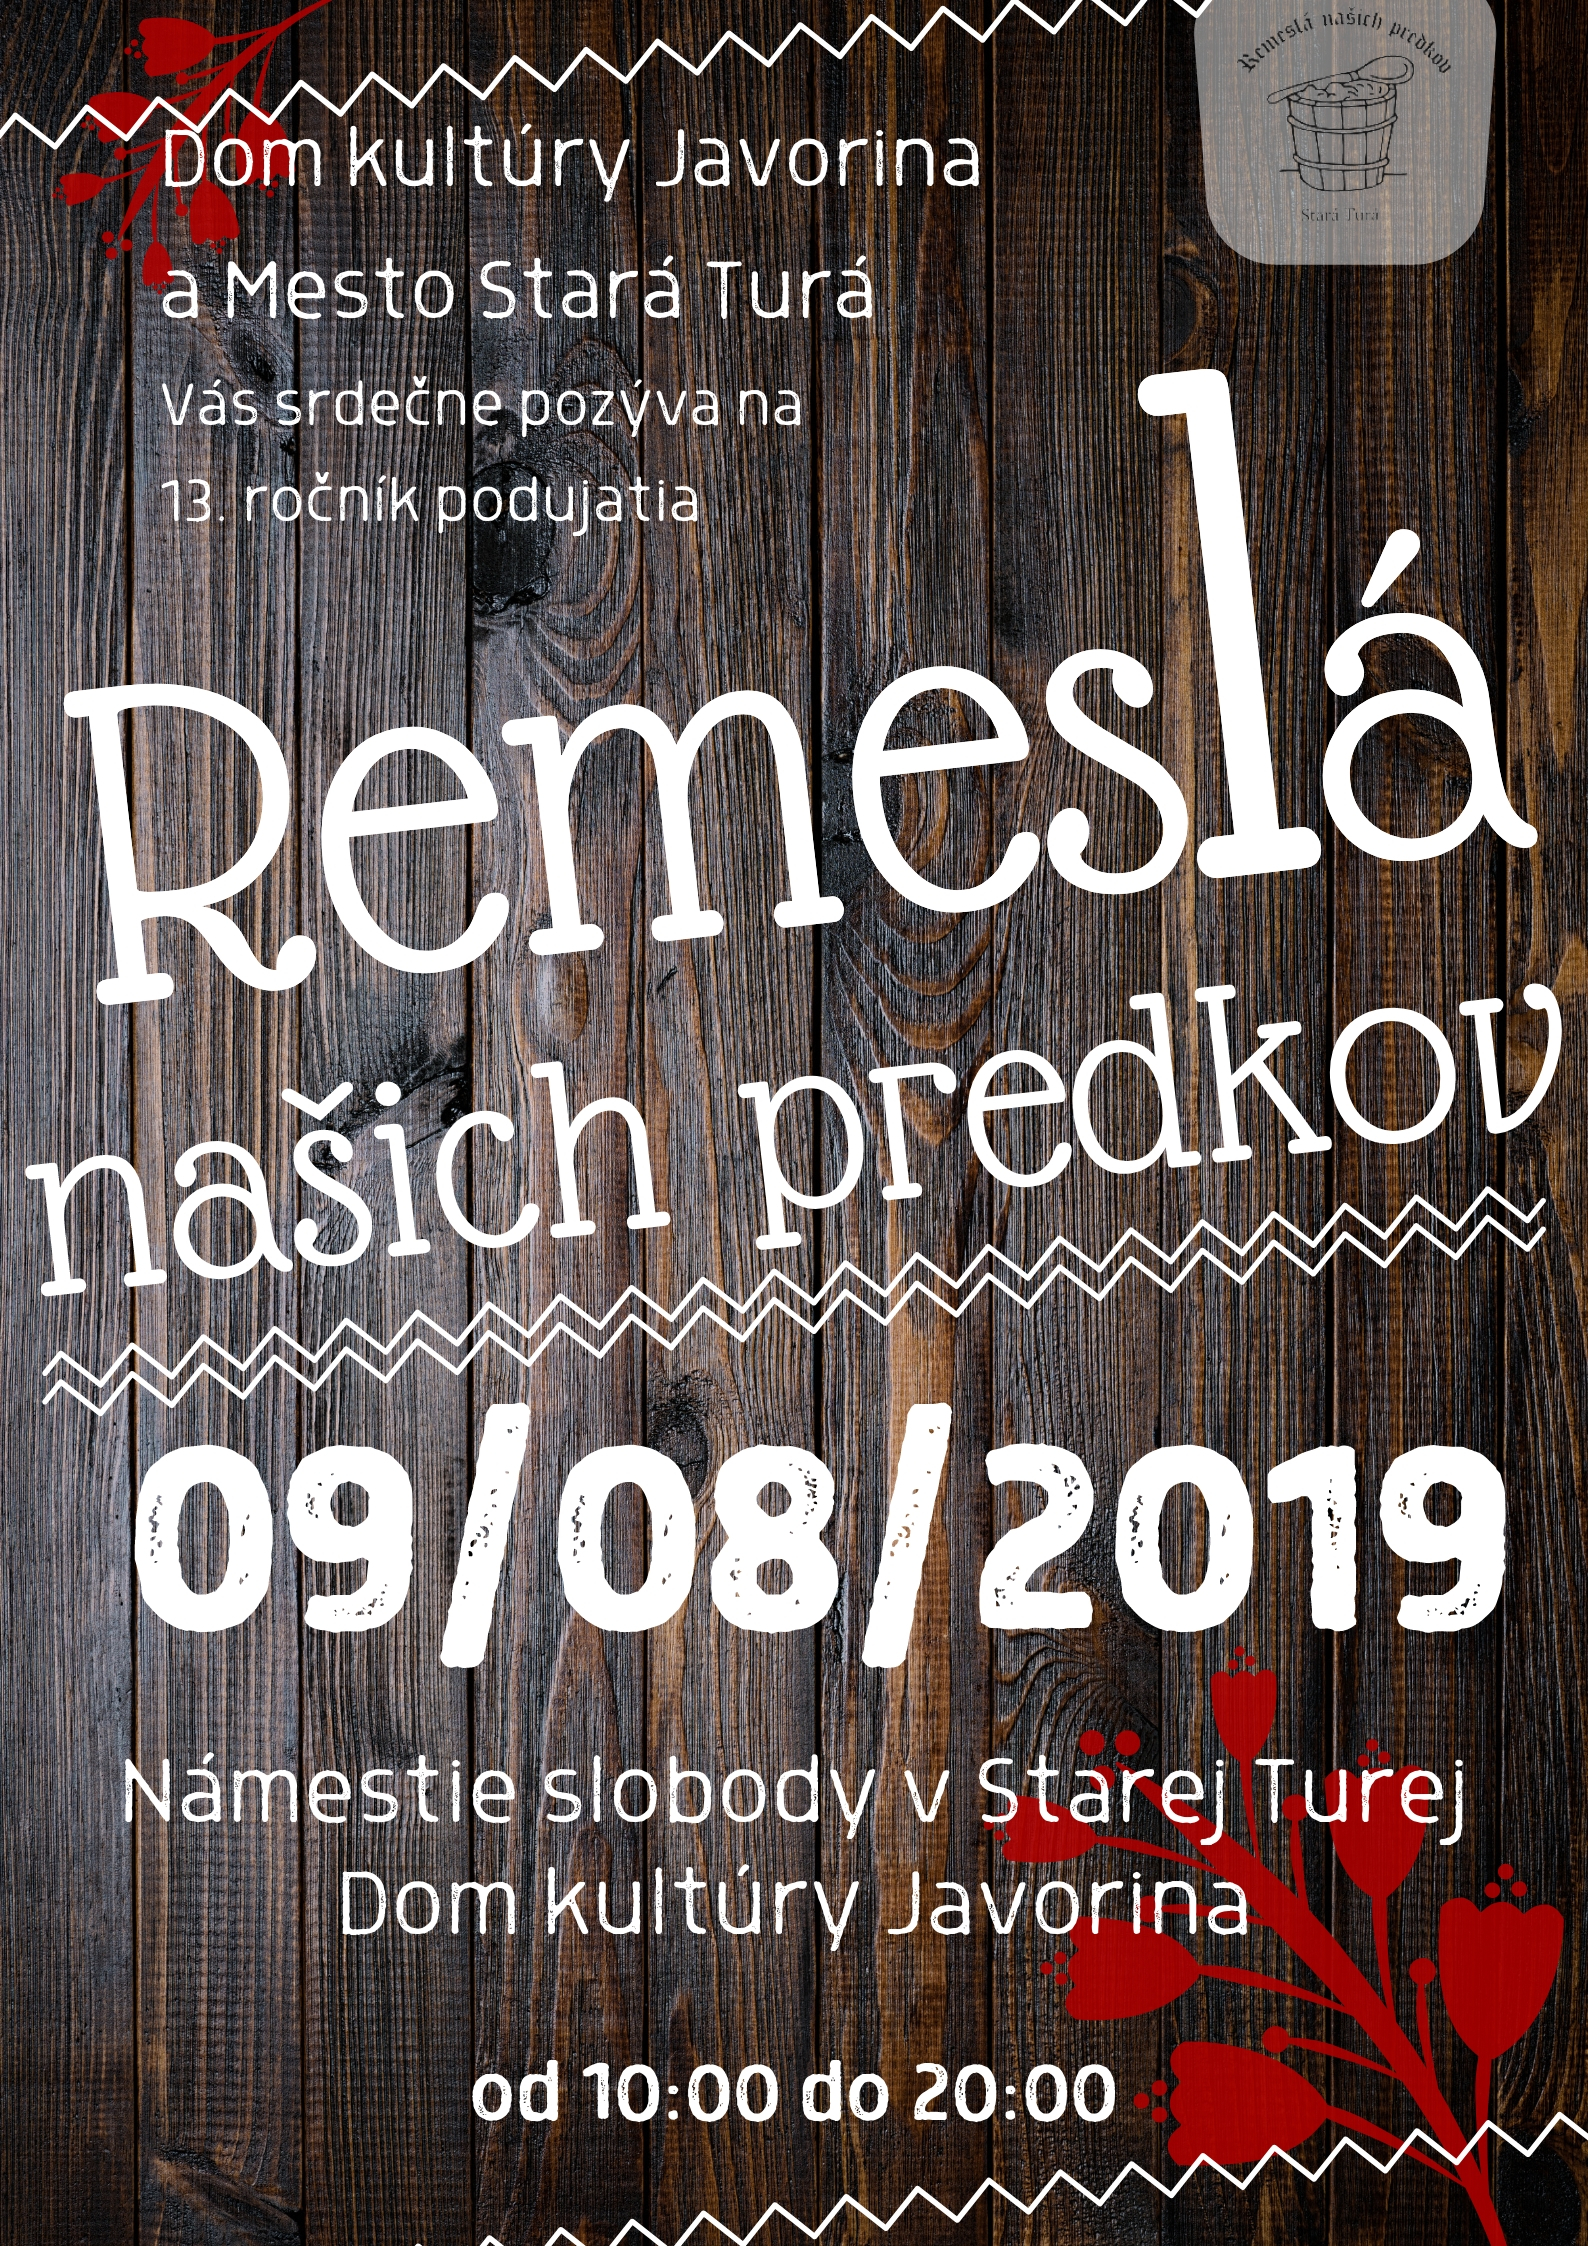 Remesl naich predkov Star Tur 2019 - 13. ronk